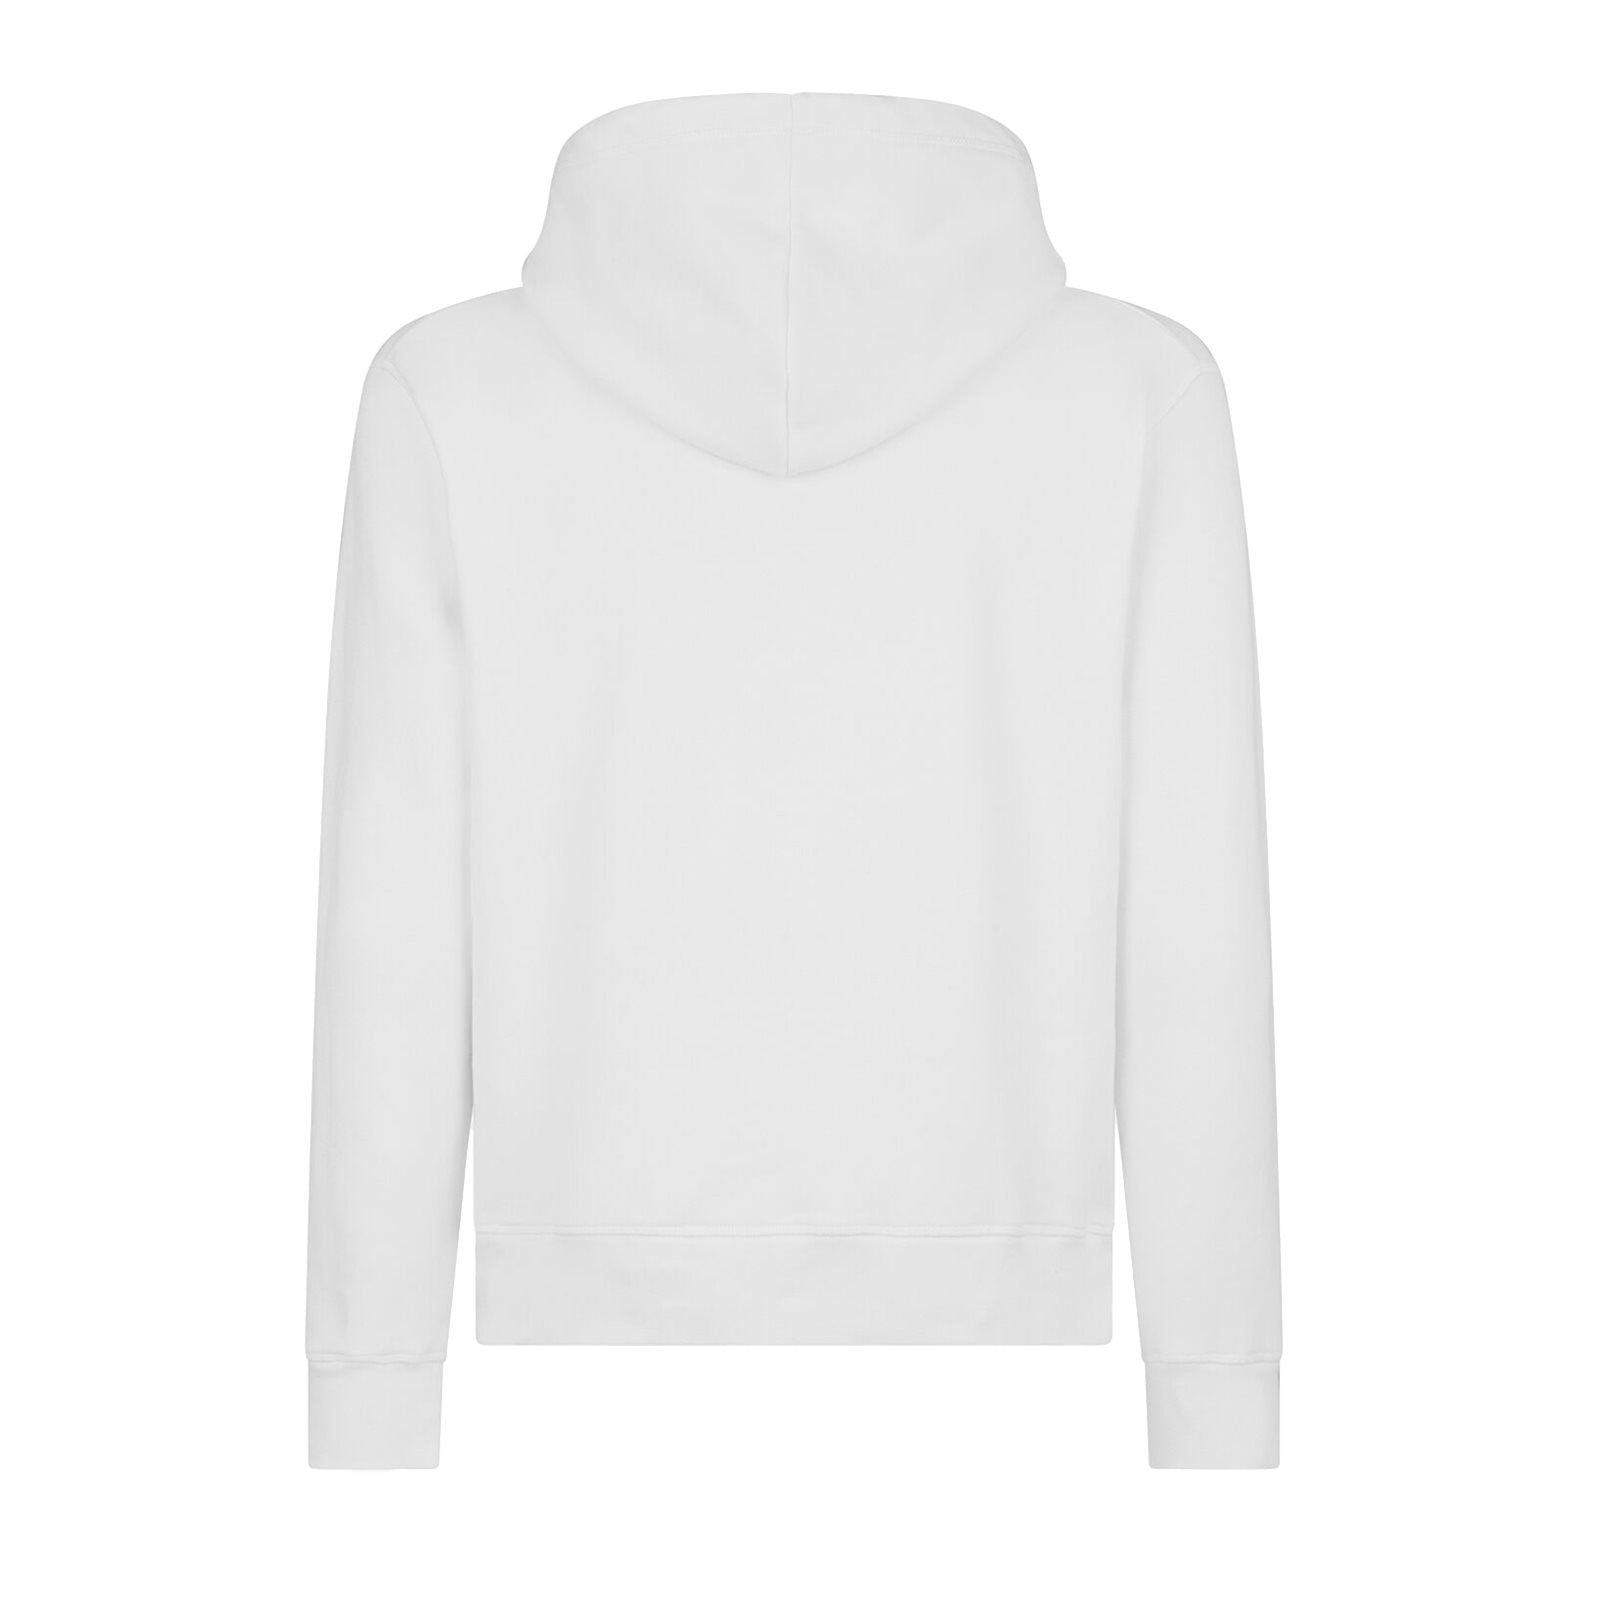 Icon print cool fit hoodie